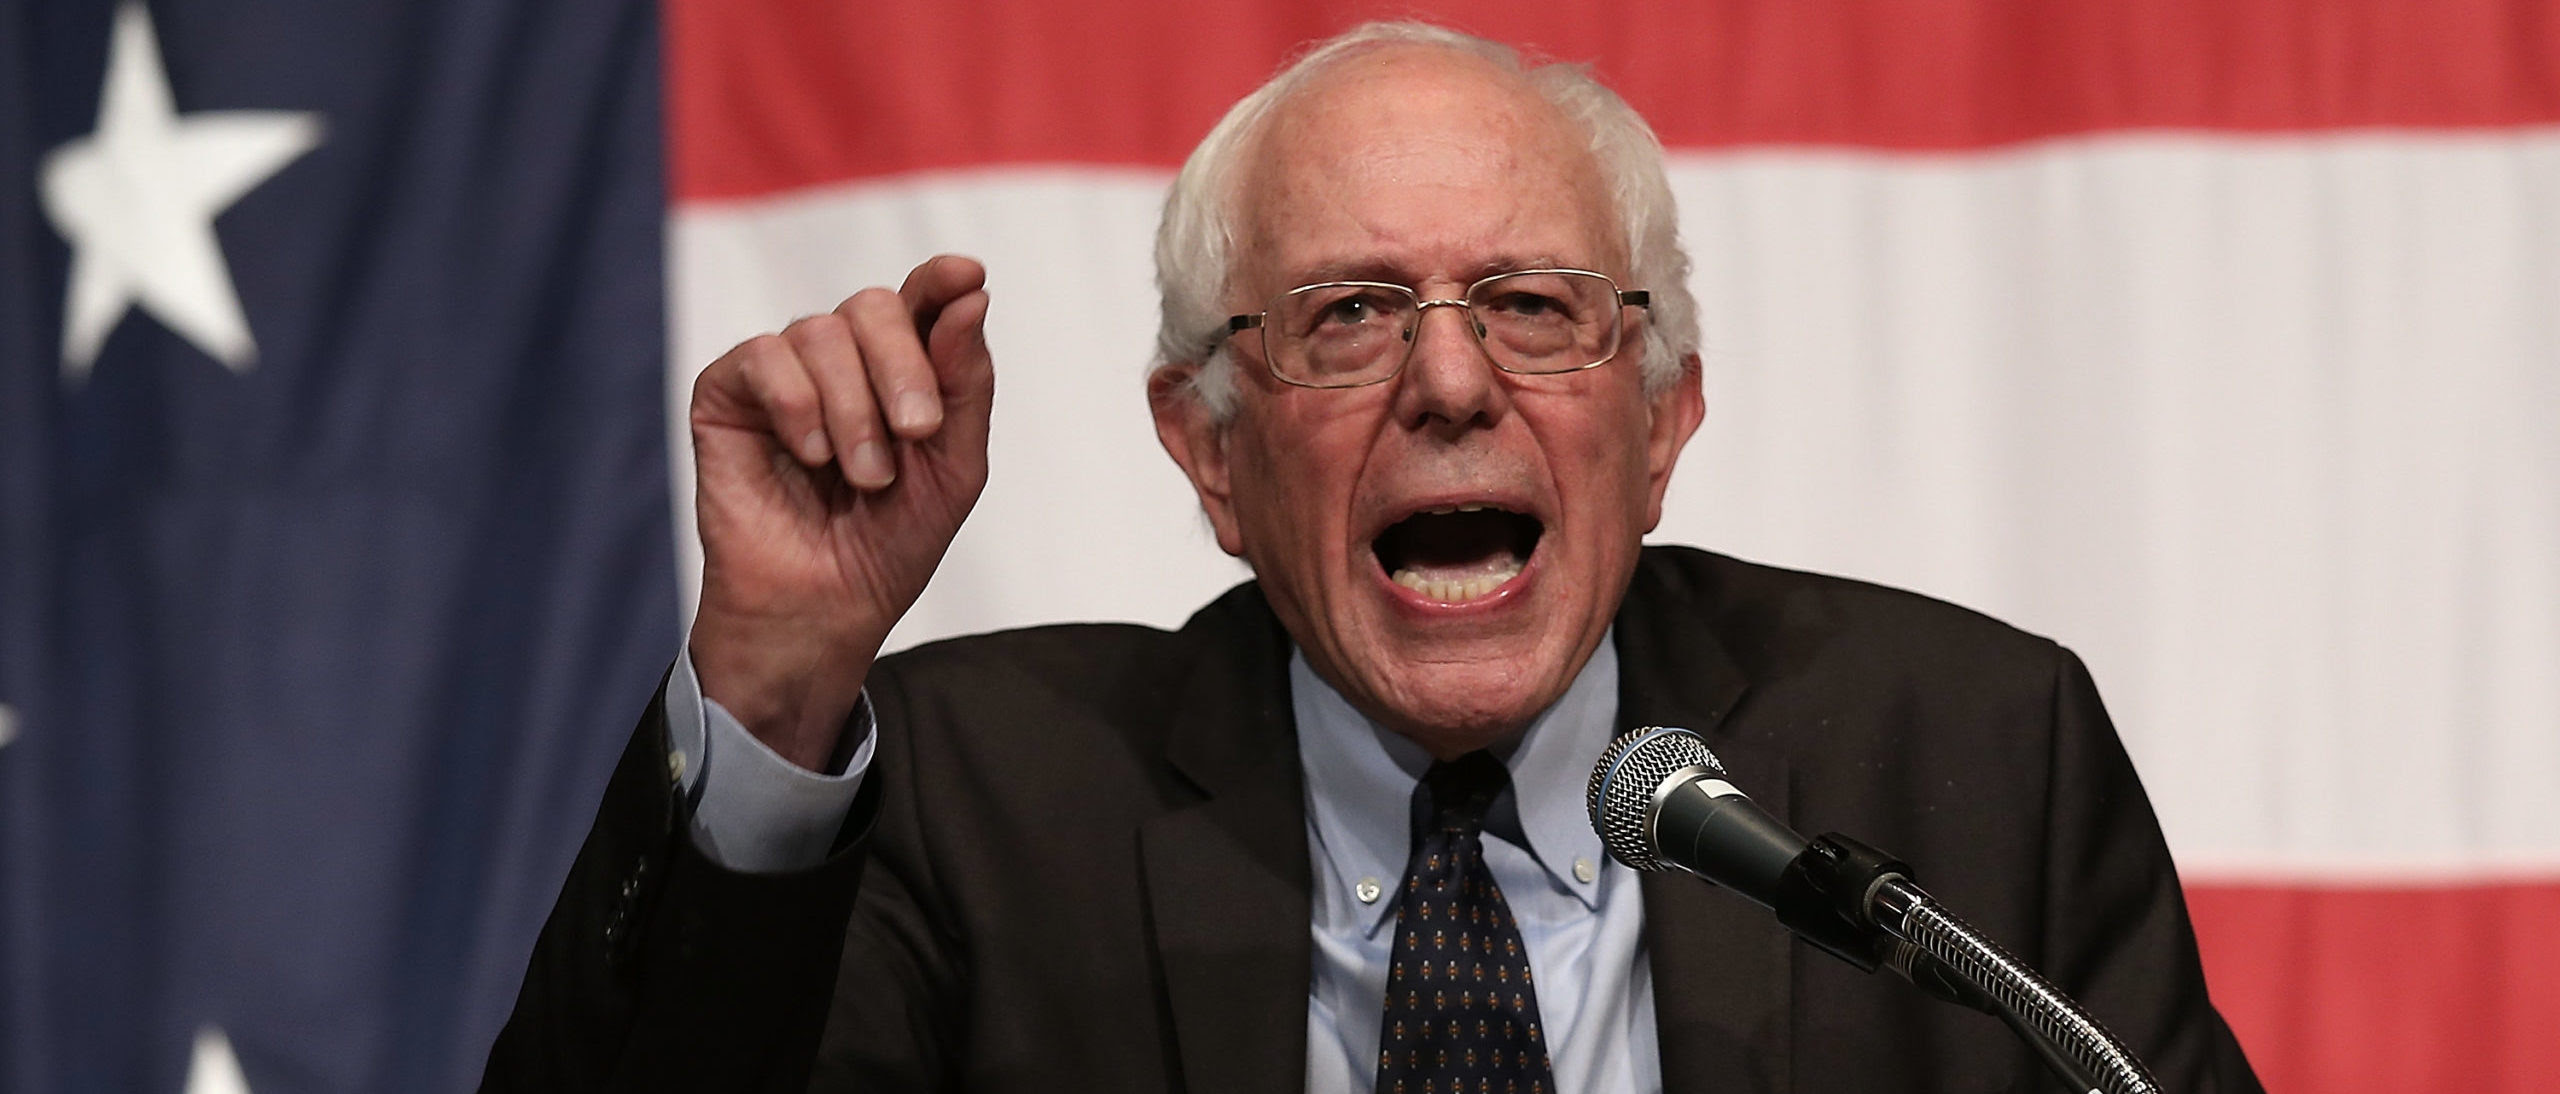 Bernie Sanders Is Once Again Considering A Run For President